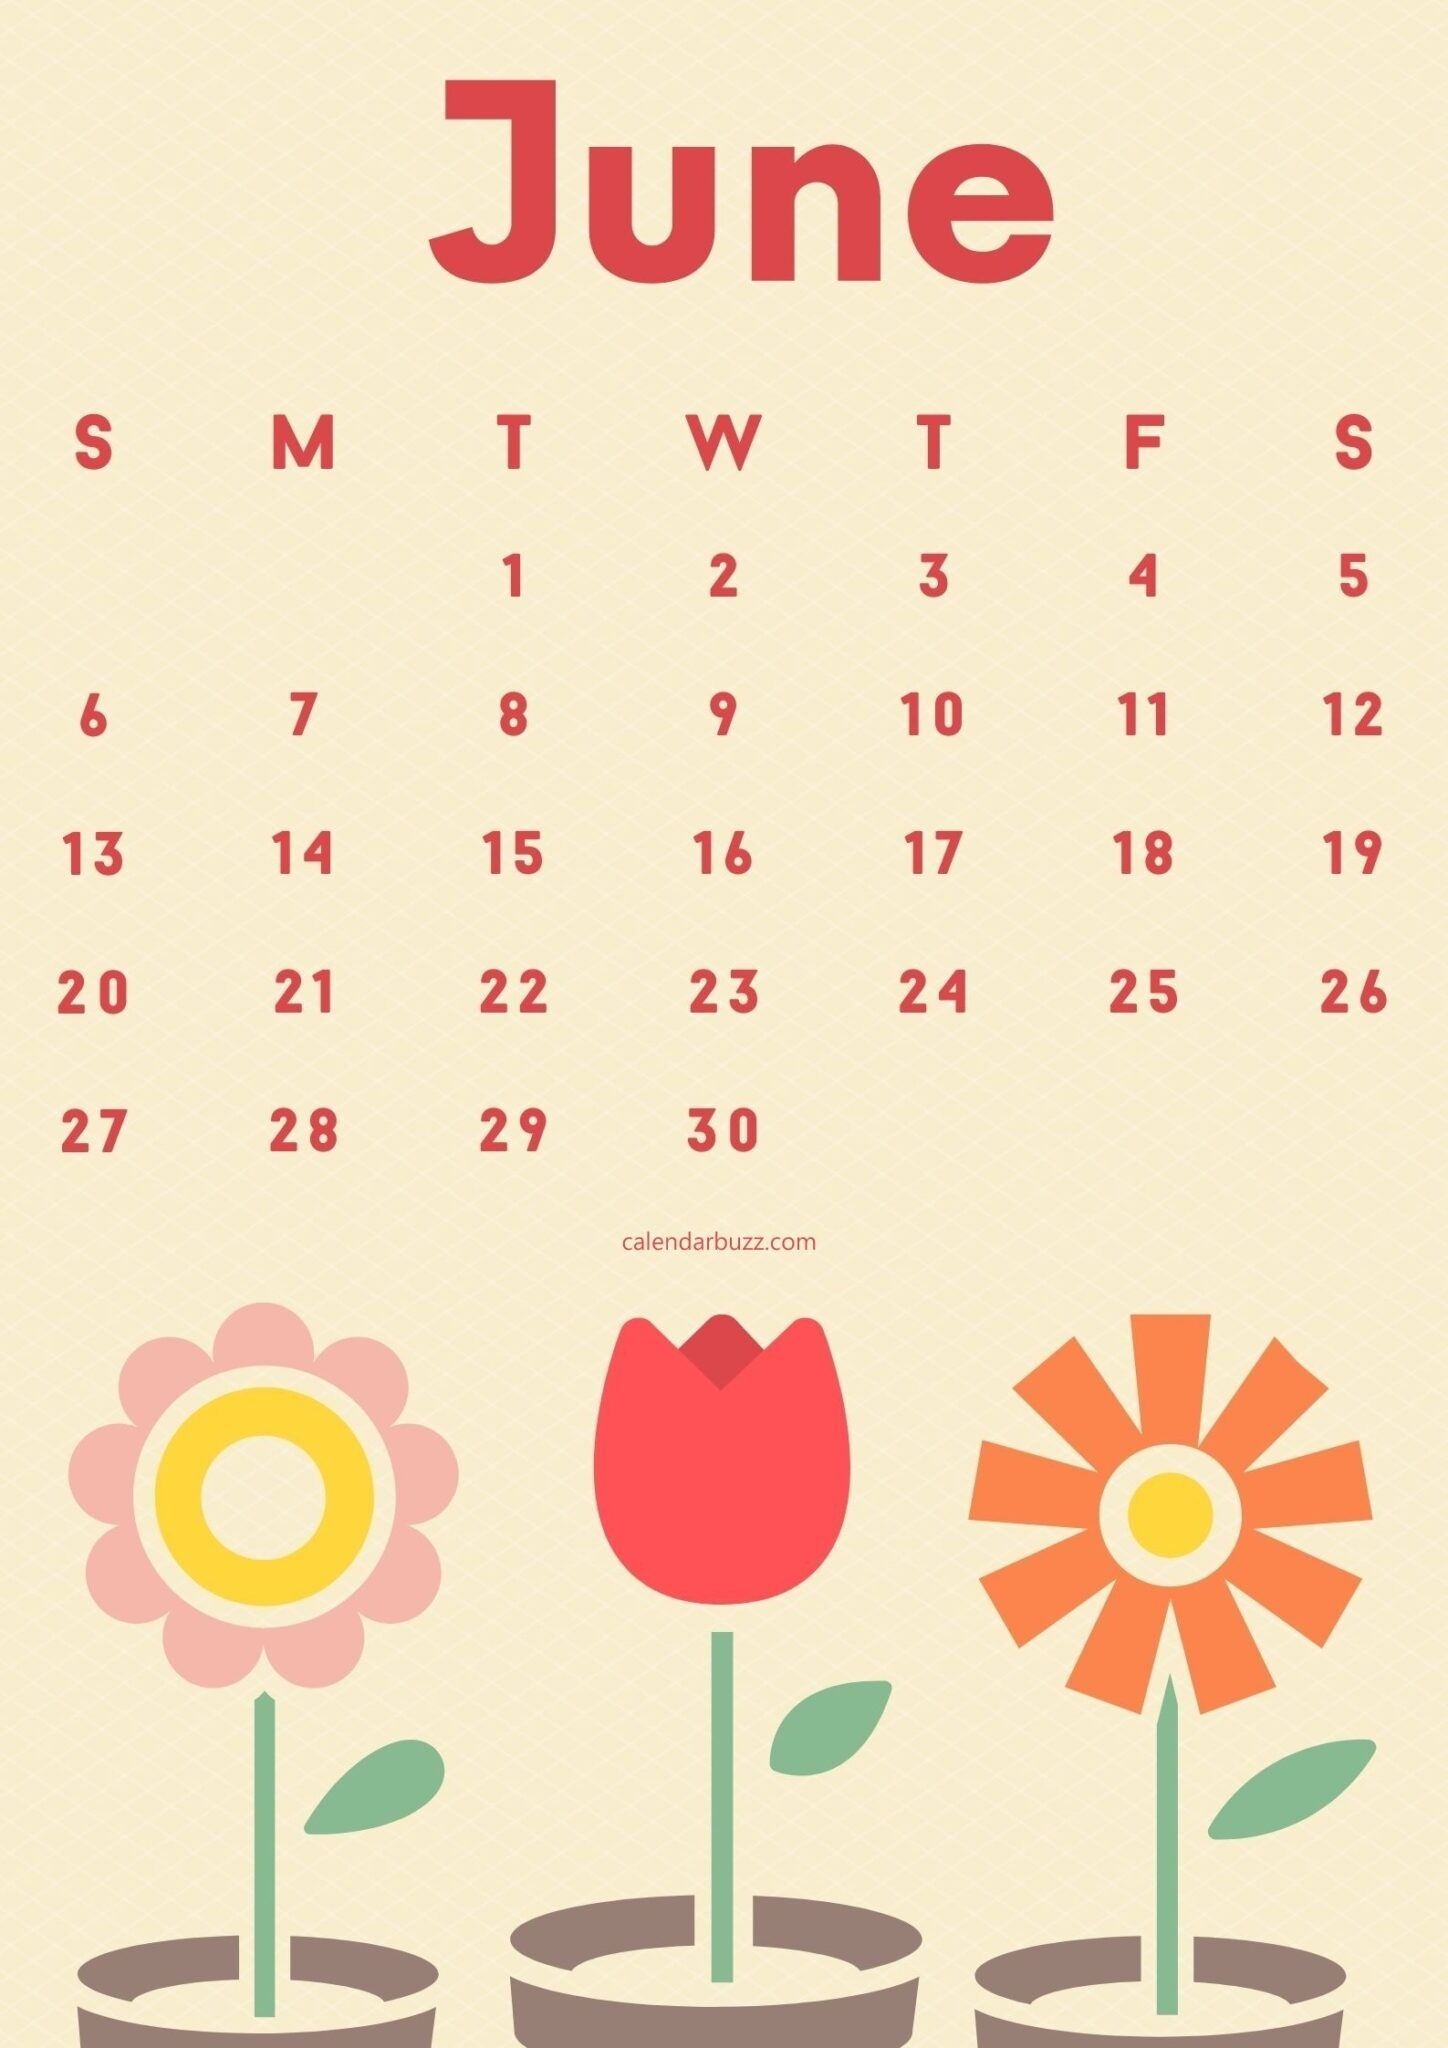 June 2021 Printable Calendar Free Download | Calendarbuzz Www.wiki-Calendar.com June 2021